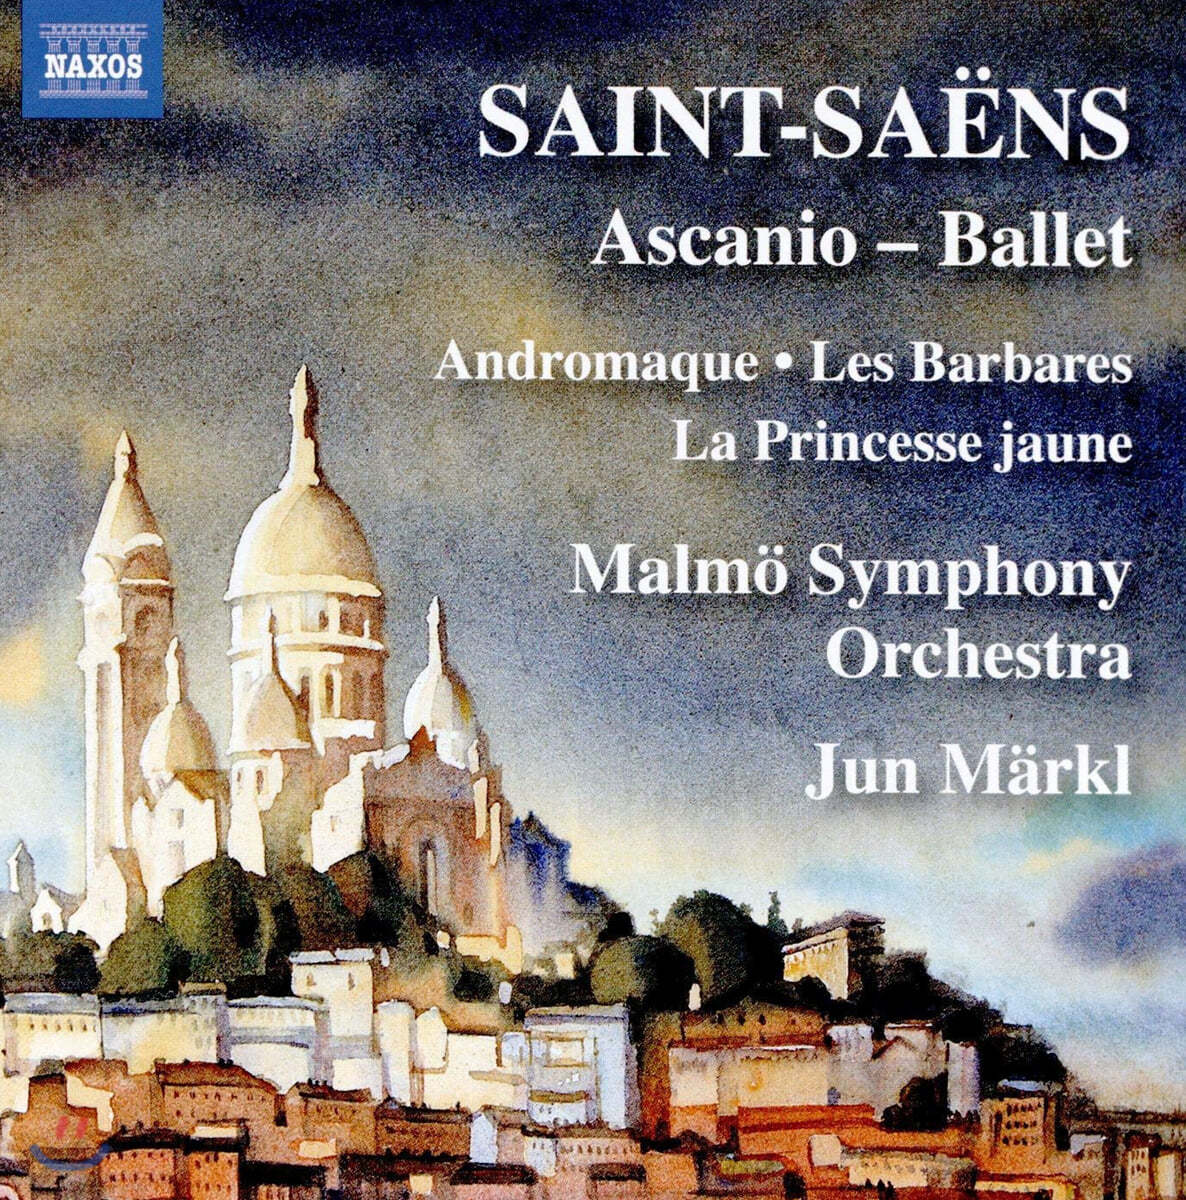 Jun Markl 생상스: 발레음악 '아스카니오', 극음악 작품 서곡 (Saint-Saens: Ascanio: Ballet Music)